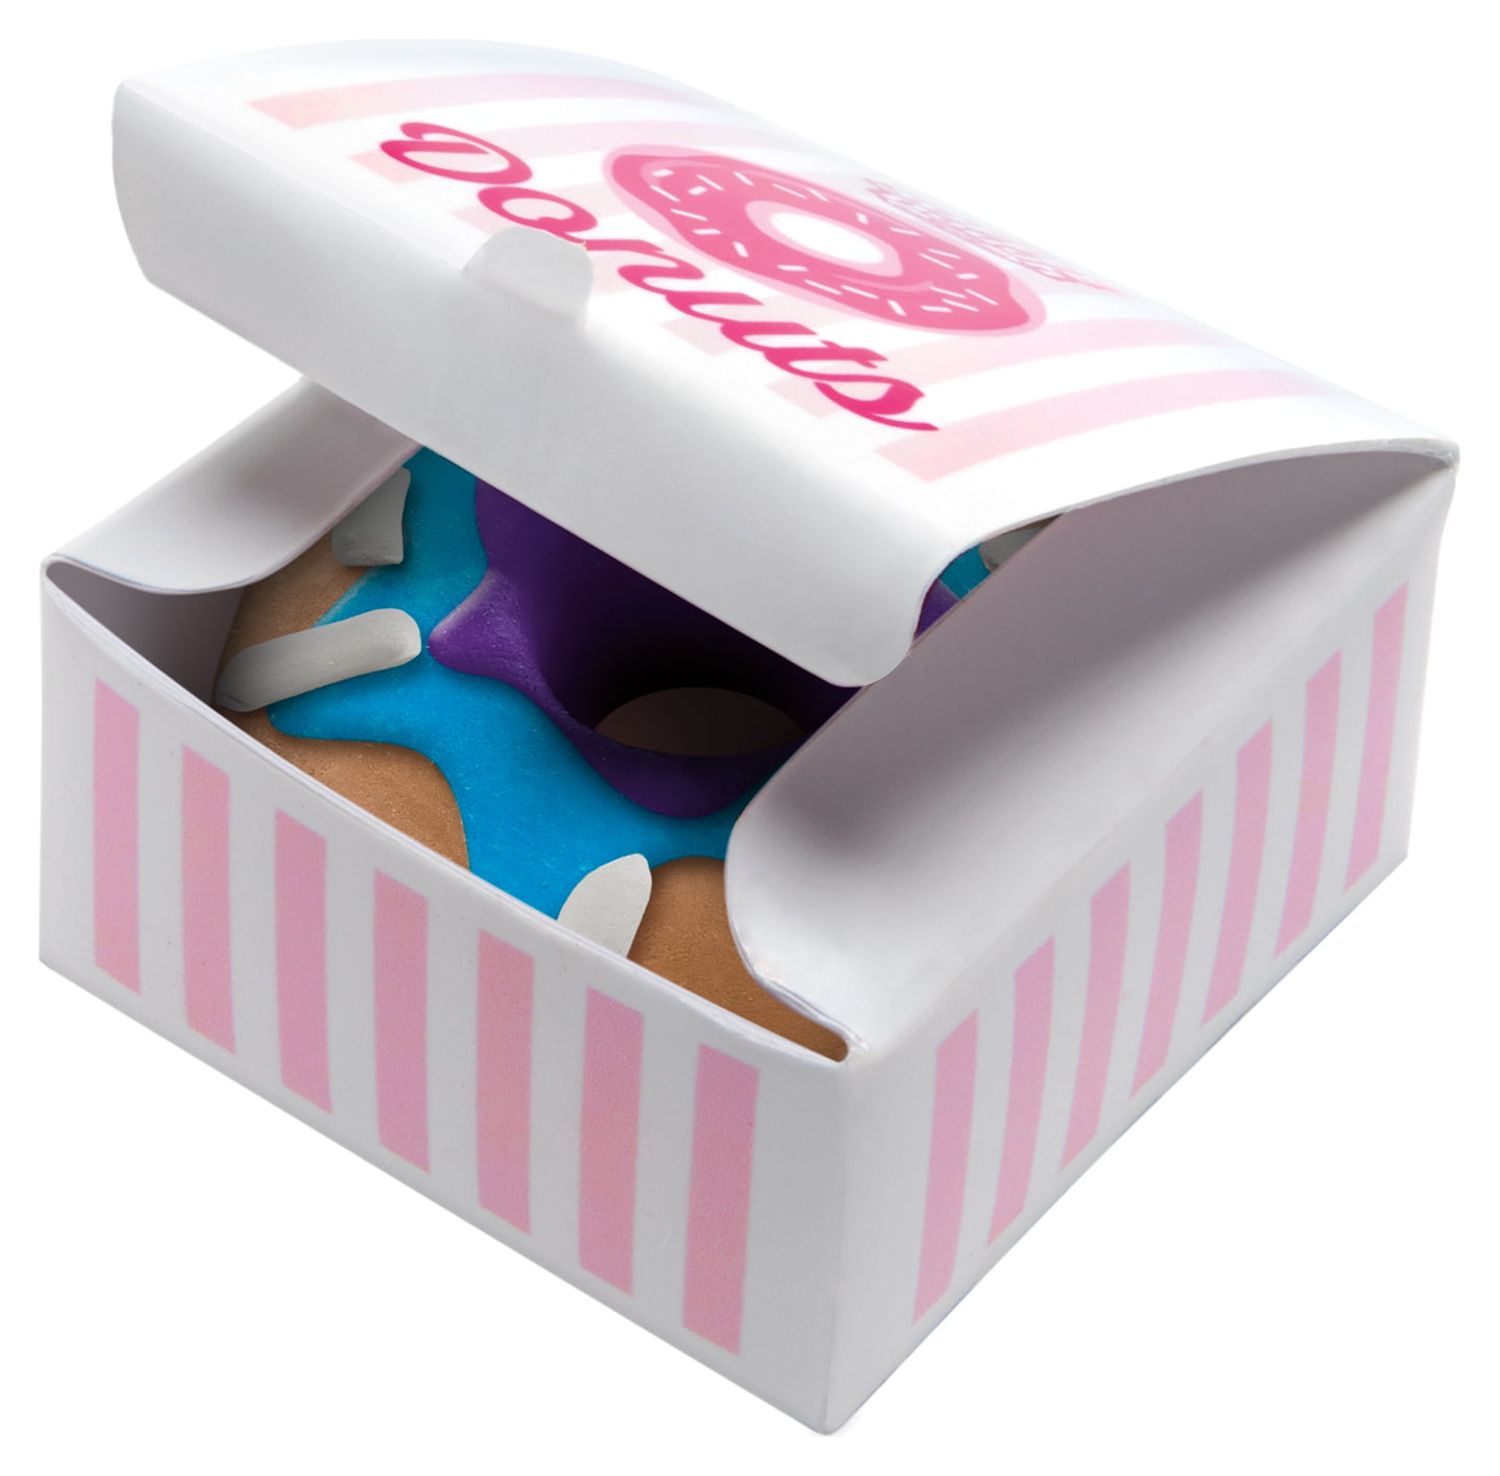 Cra-Z-Art Softee Dough Donut Maker Kit Pink, Blue & Yellow Dough - image 4 of 8